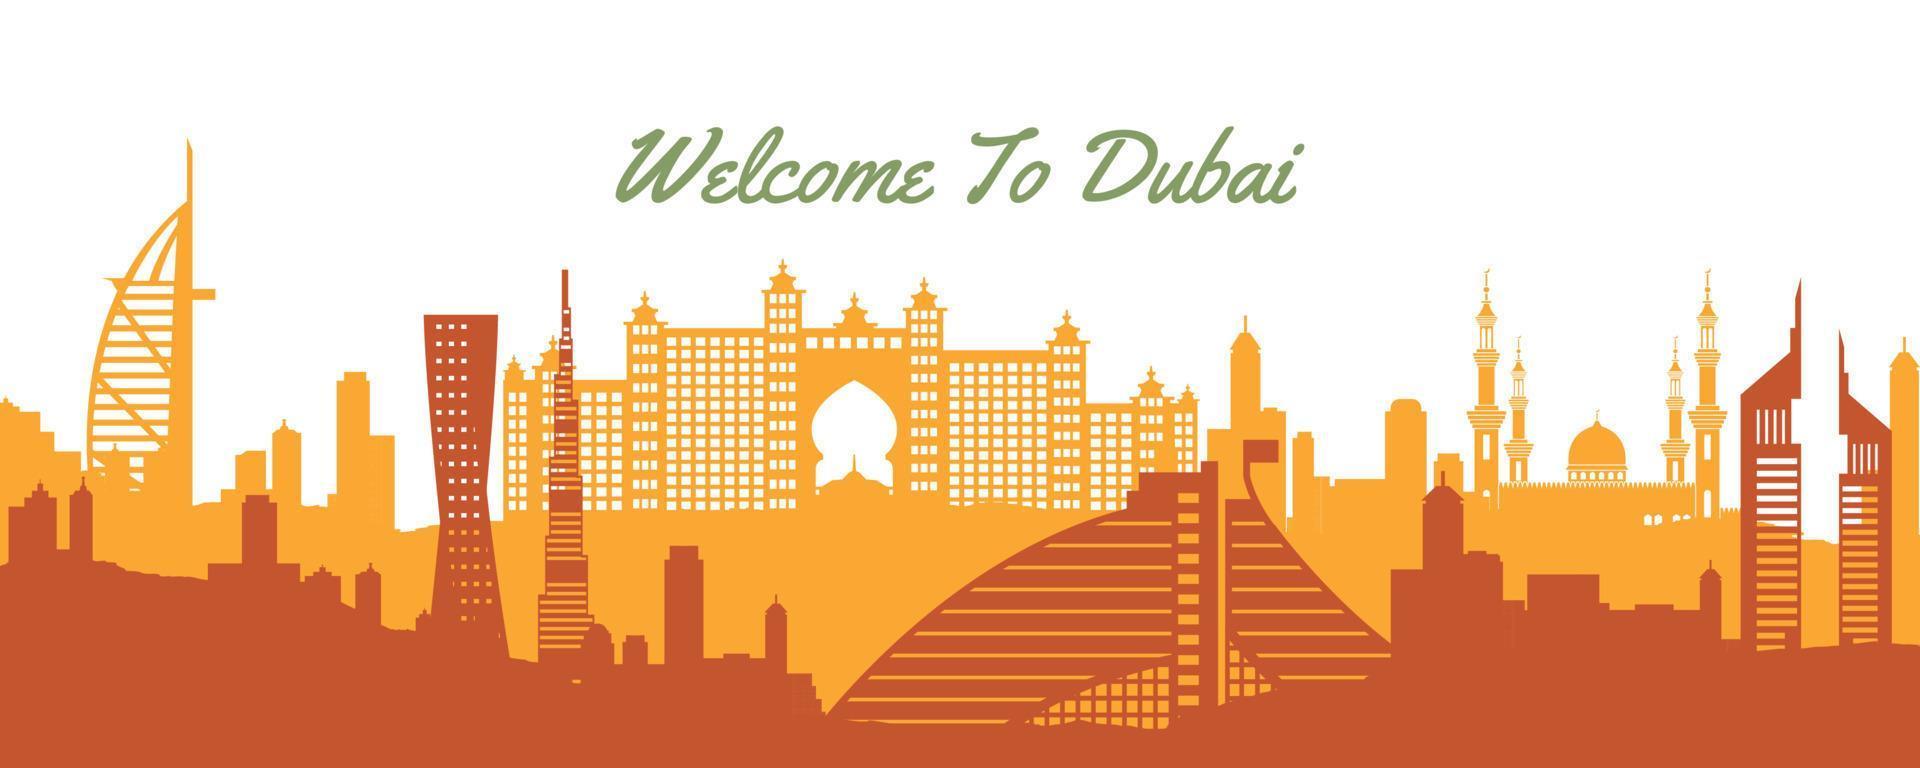 famous landmark of Dubai,travel destination with silhouette classic design vector